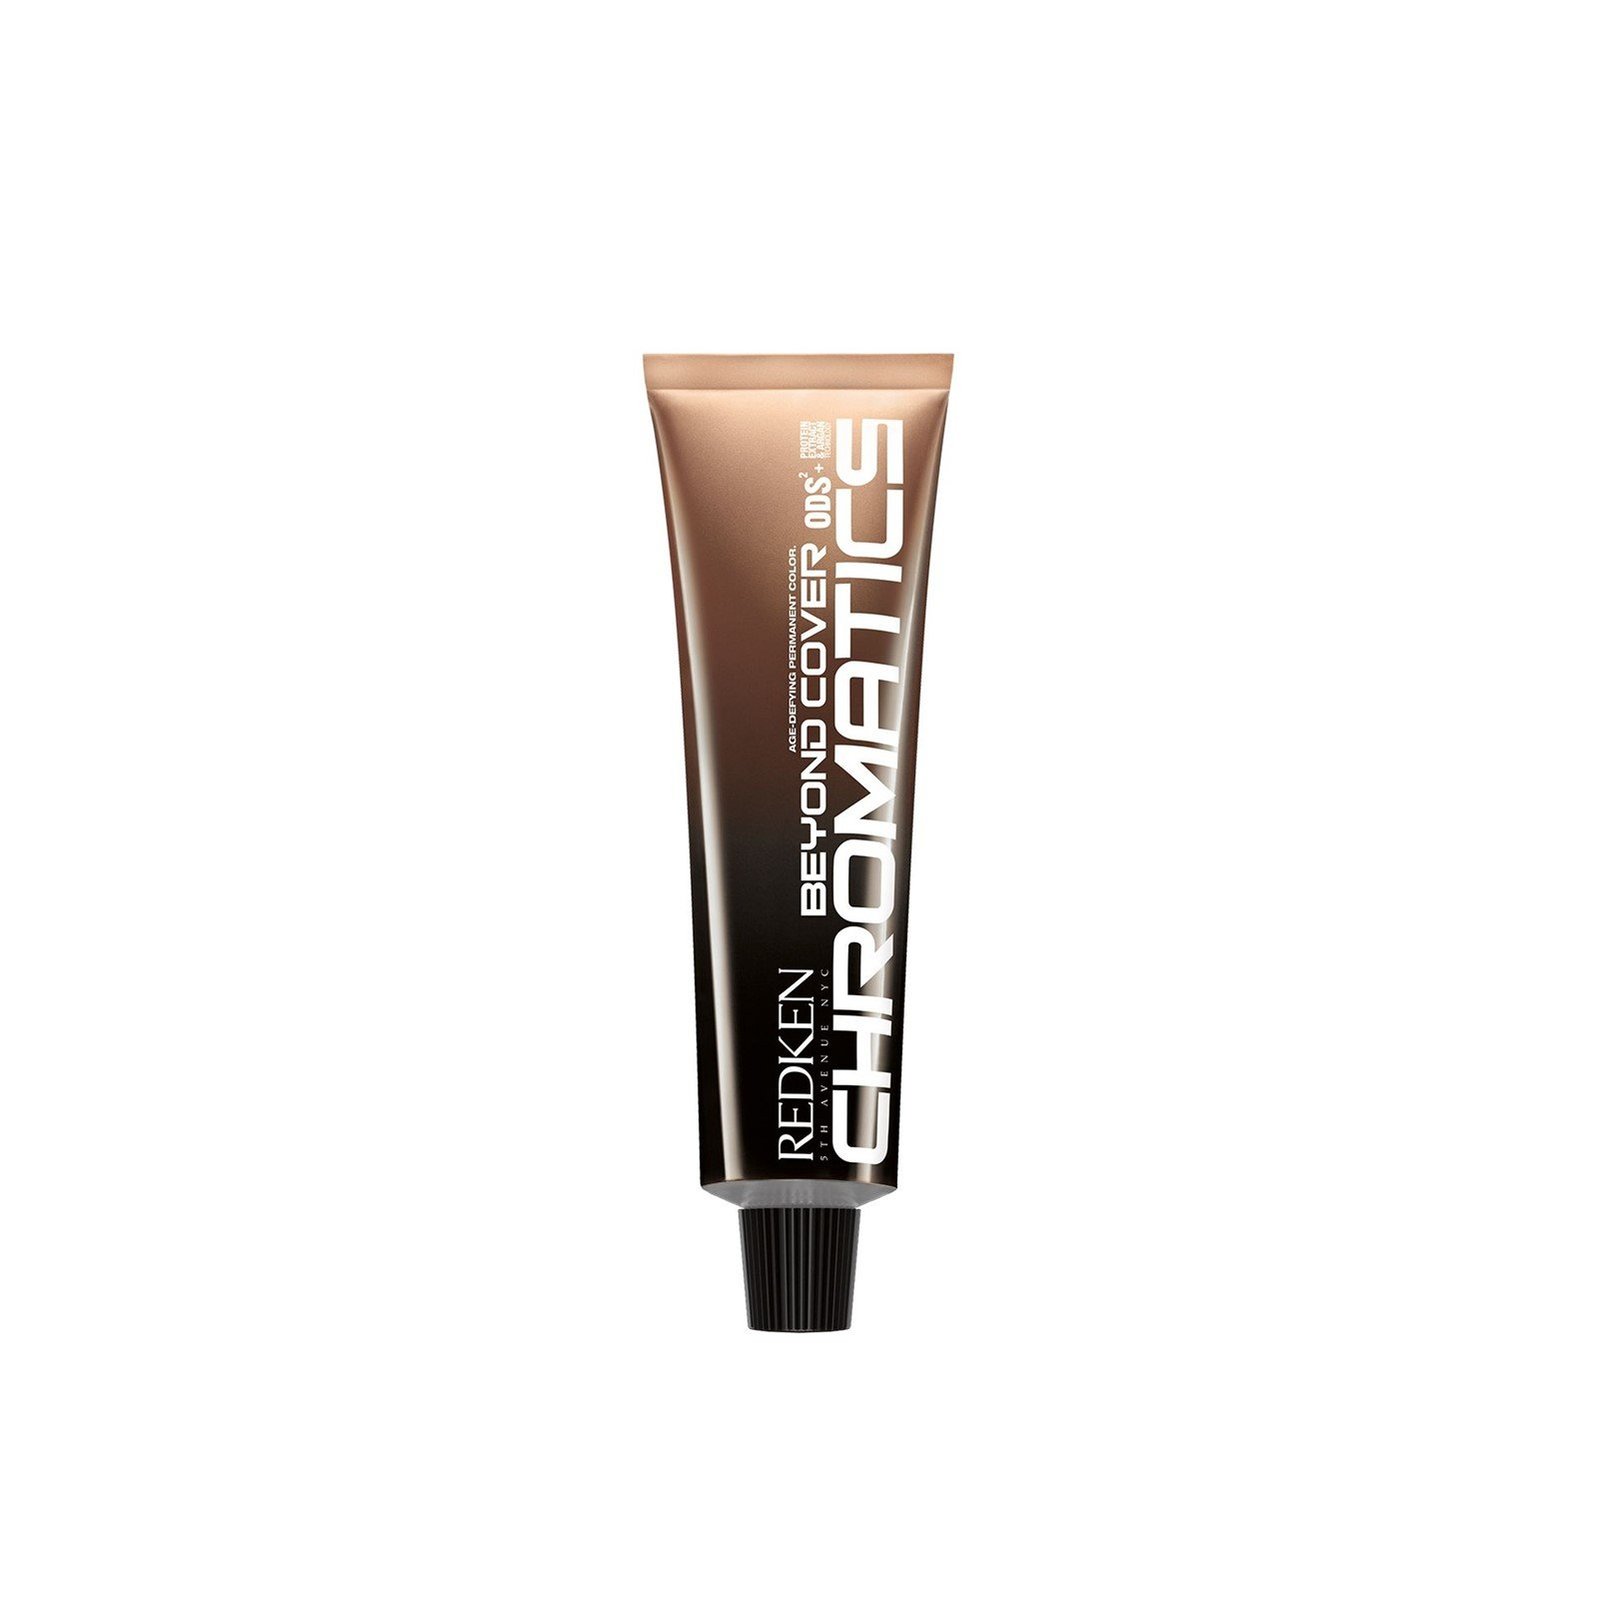 Redken Chromatics Beyond Cover Permanent Hair Dye 5GB Gold Beige 56.7g